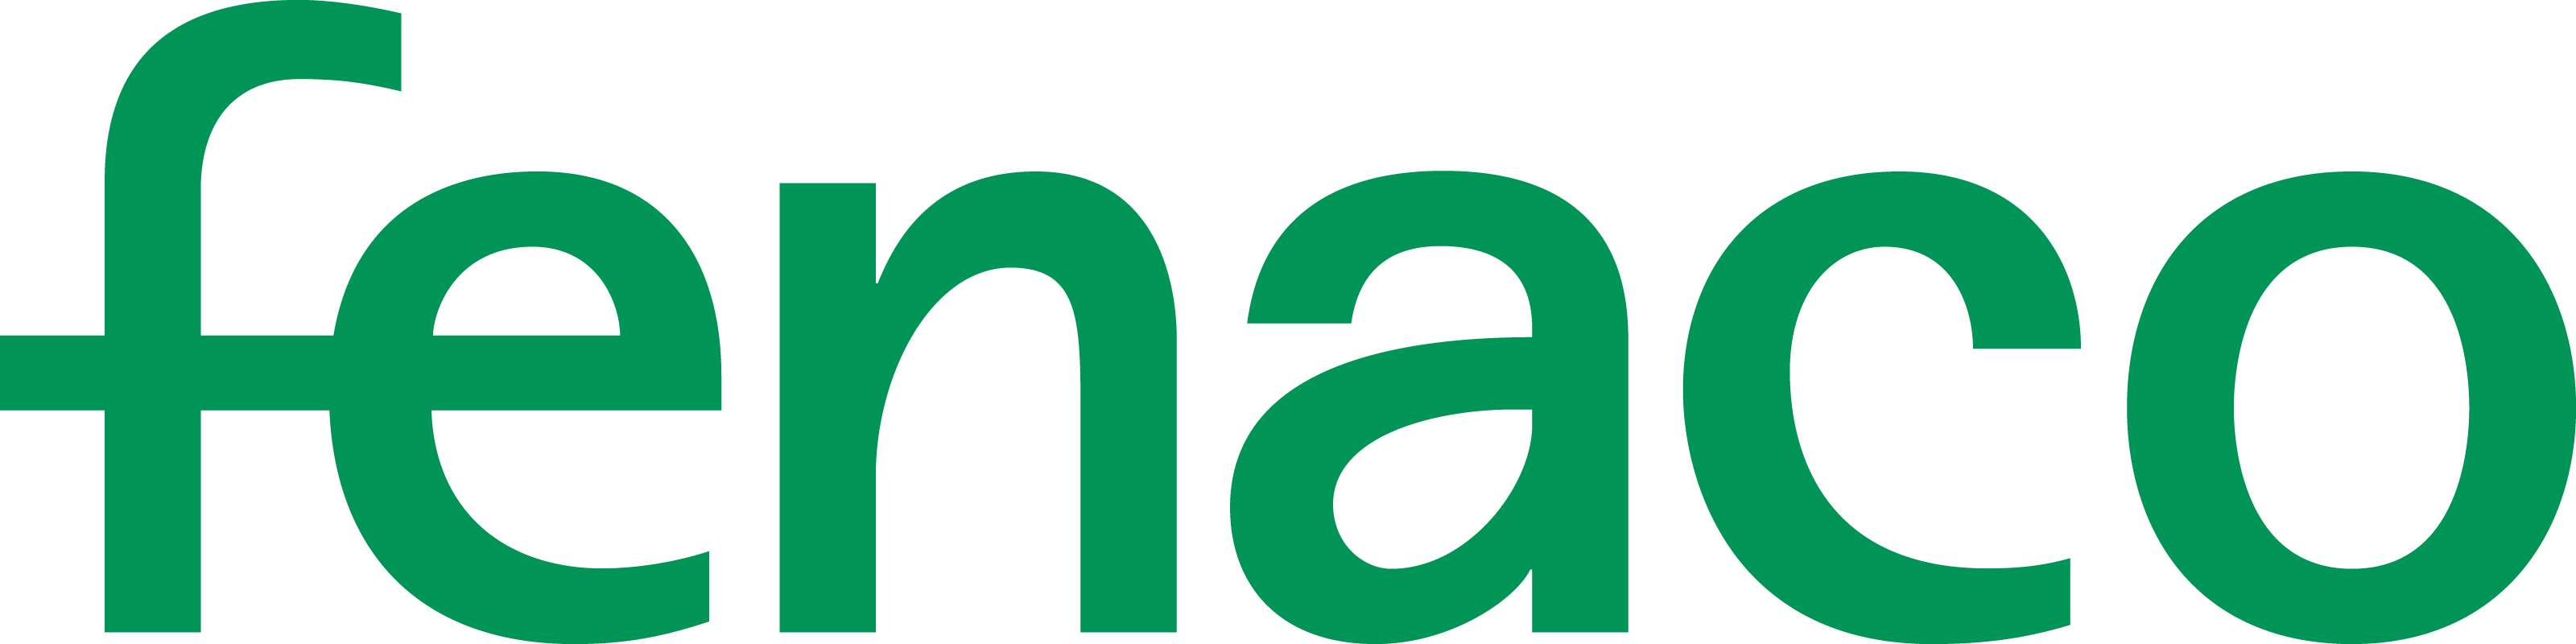 fenaco Logo Green RGB